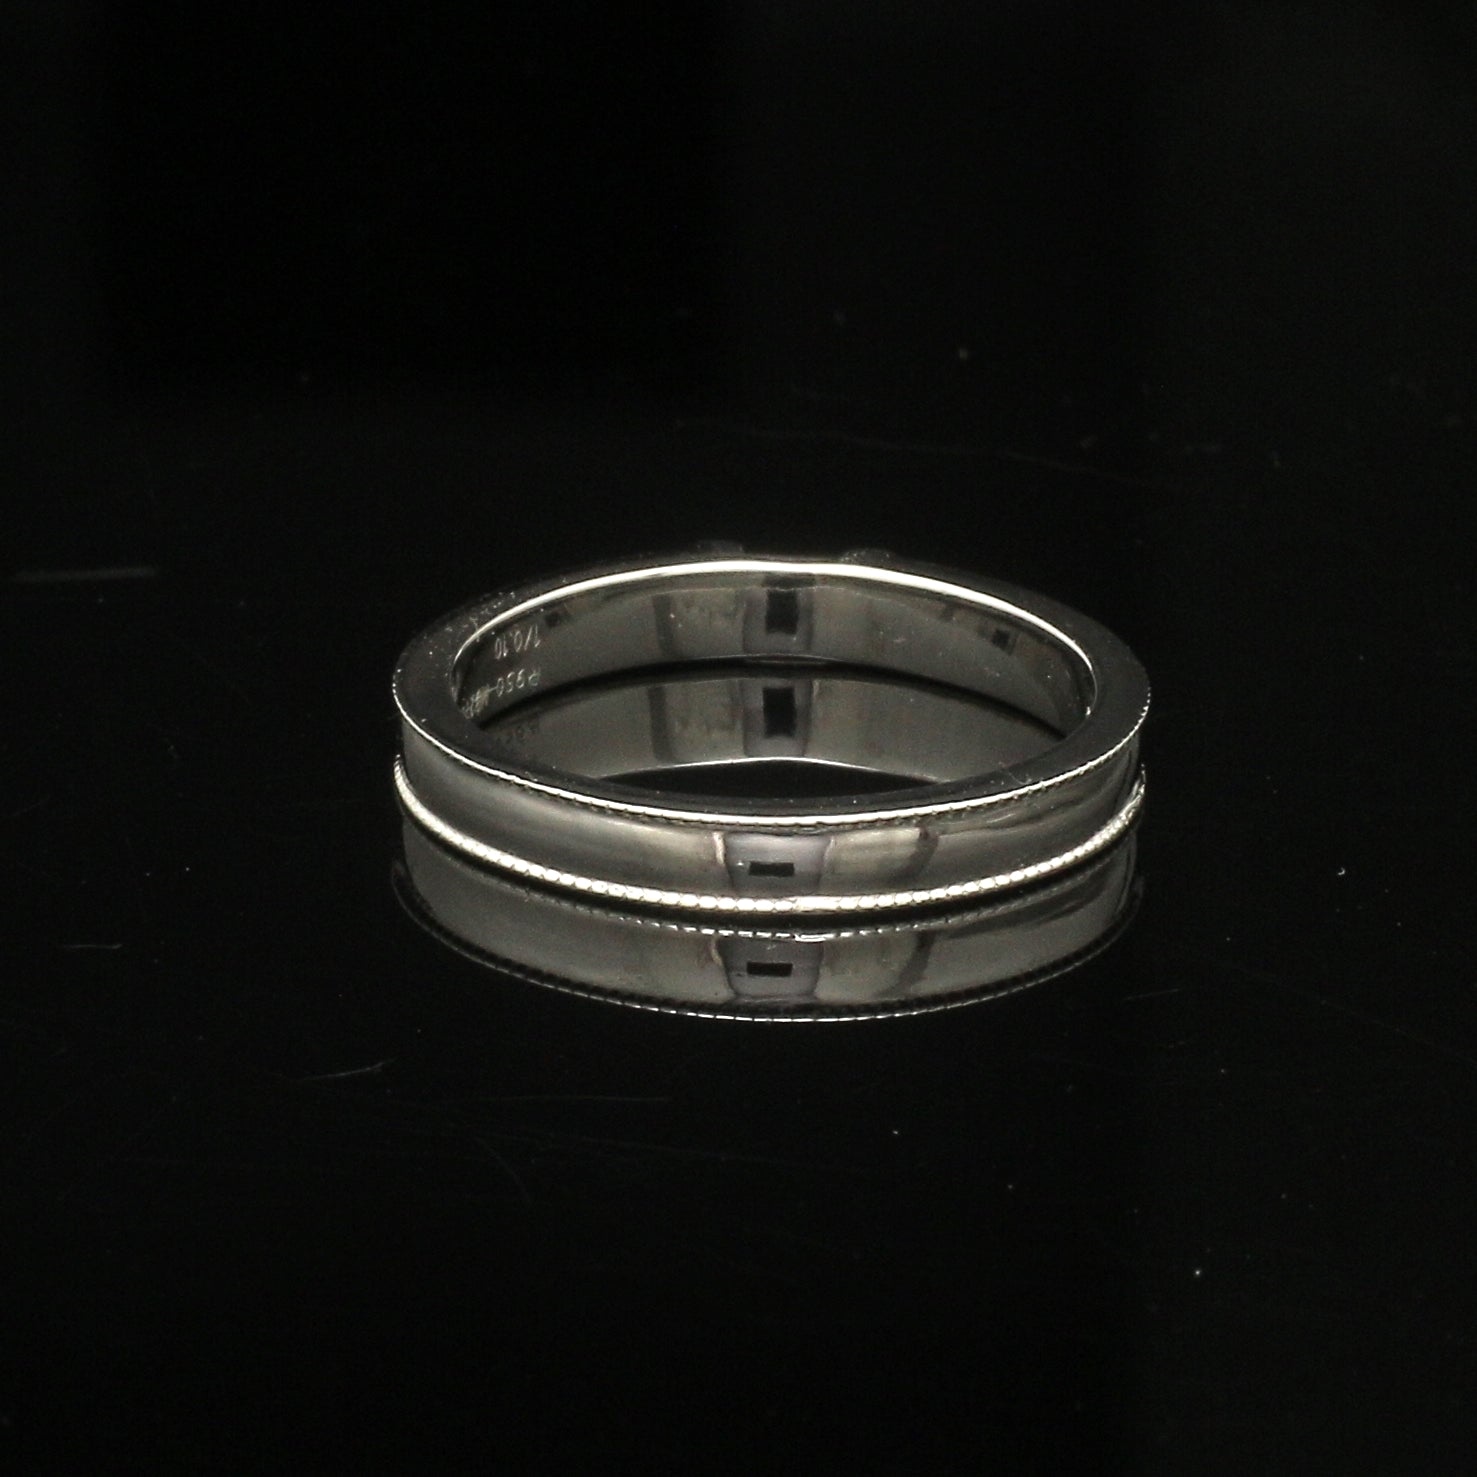 Baguette Diamond Ring for Women JL PT 432-A   Jewelove